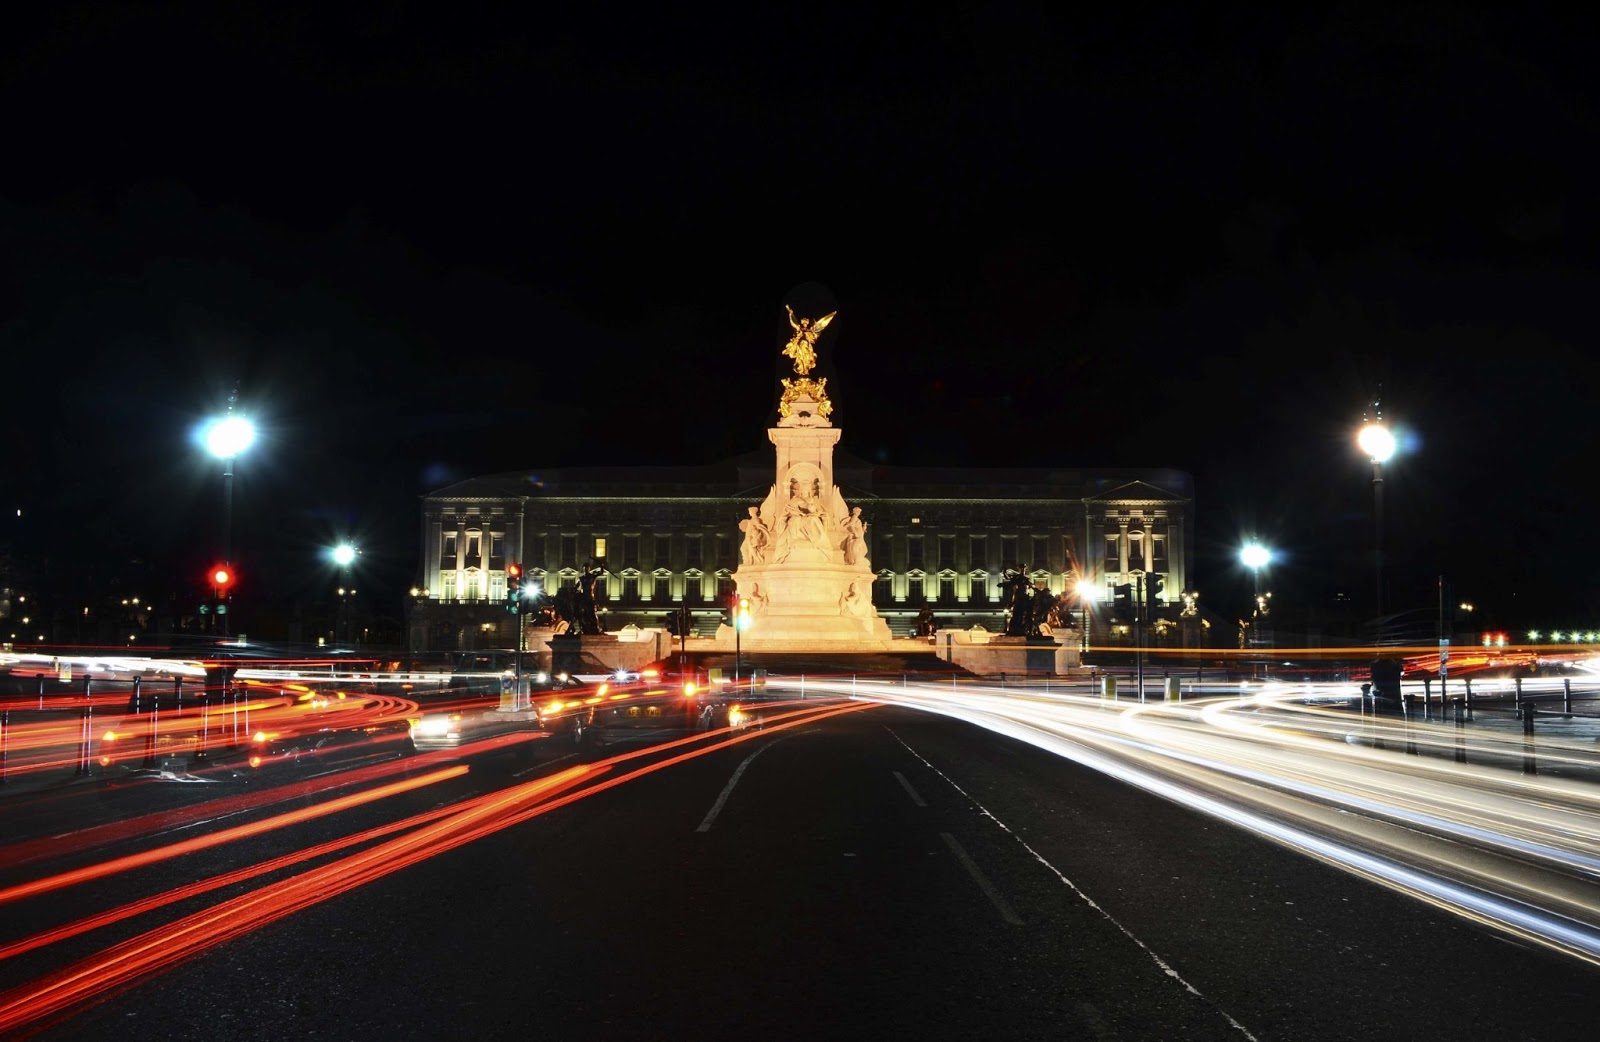 Buckingham Palace night view